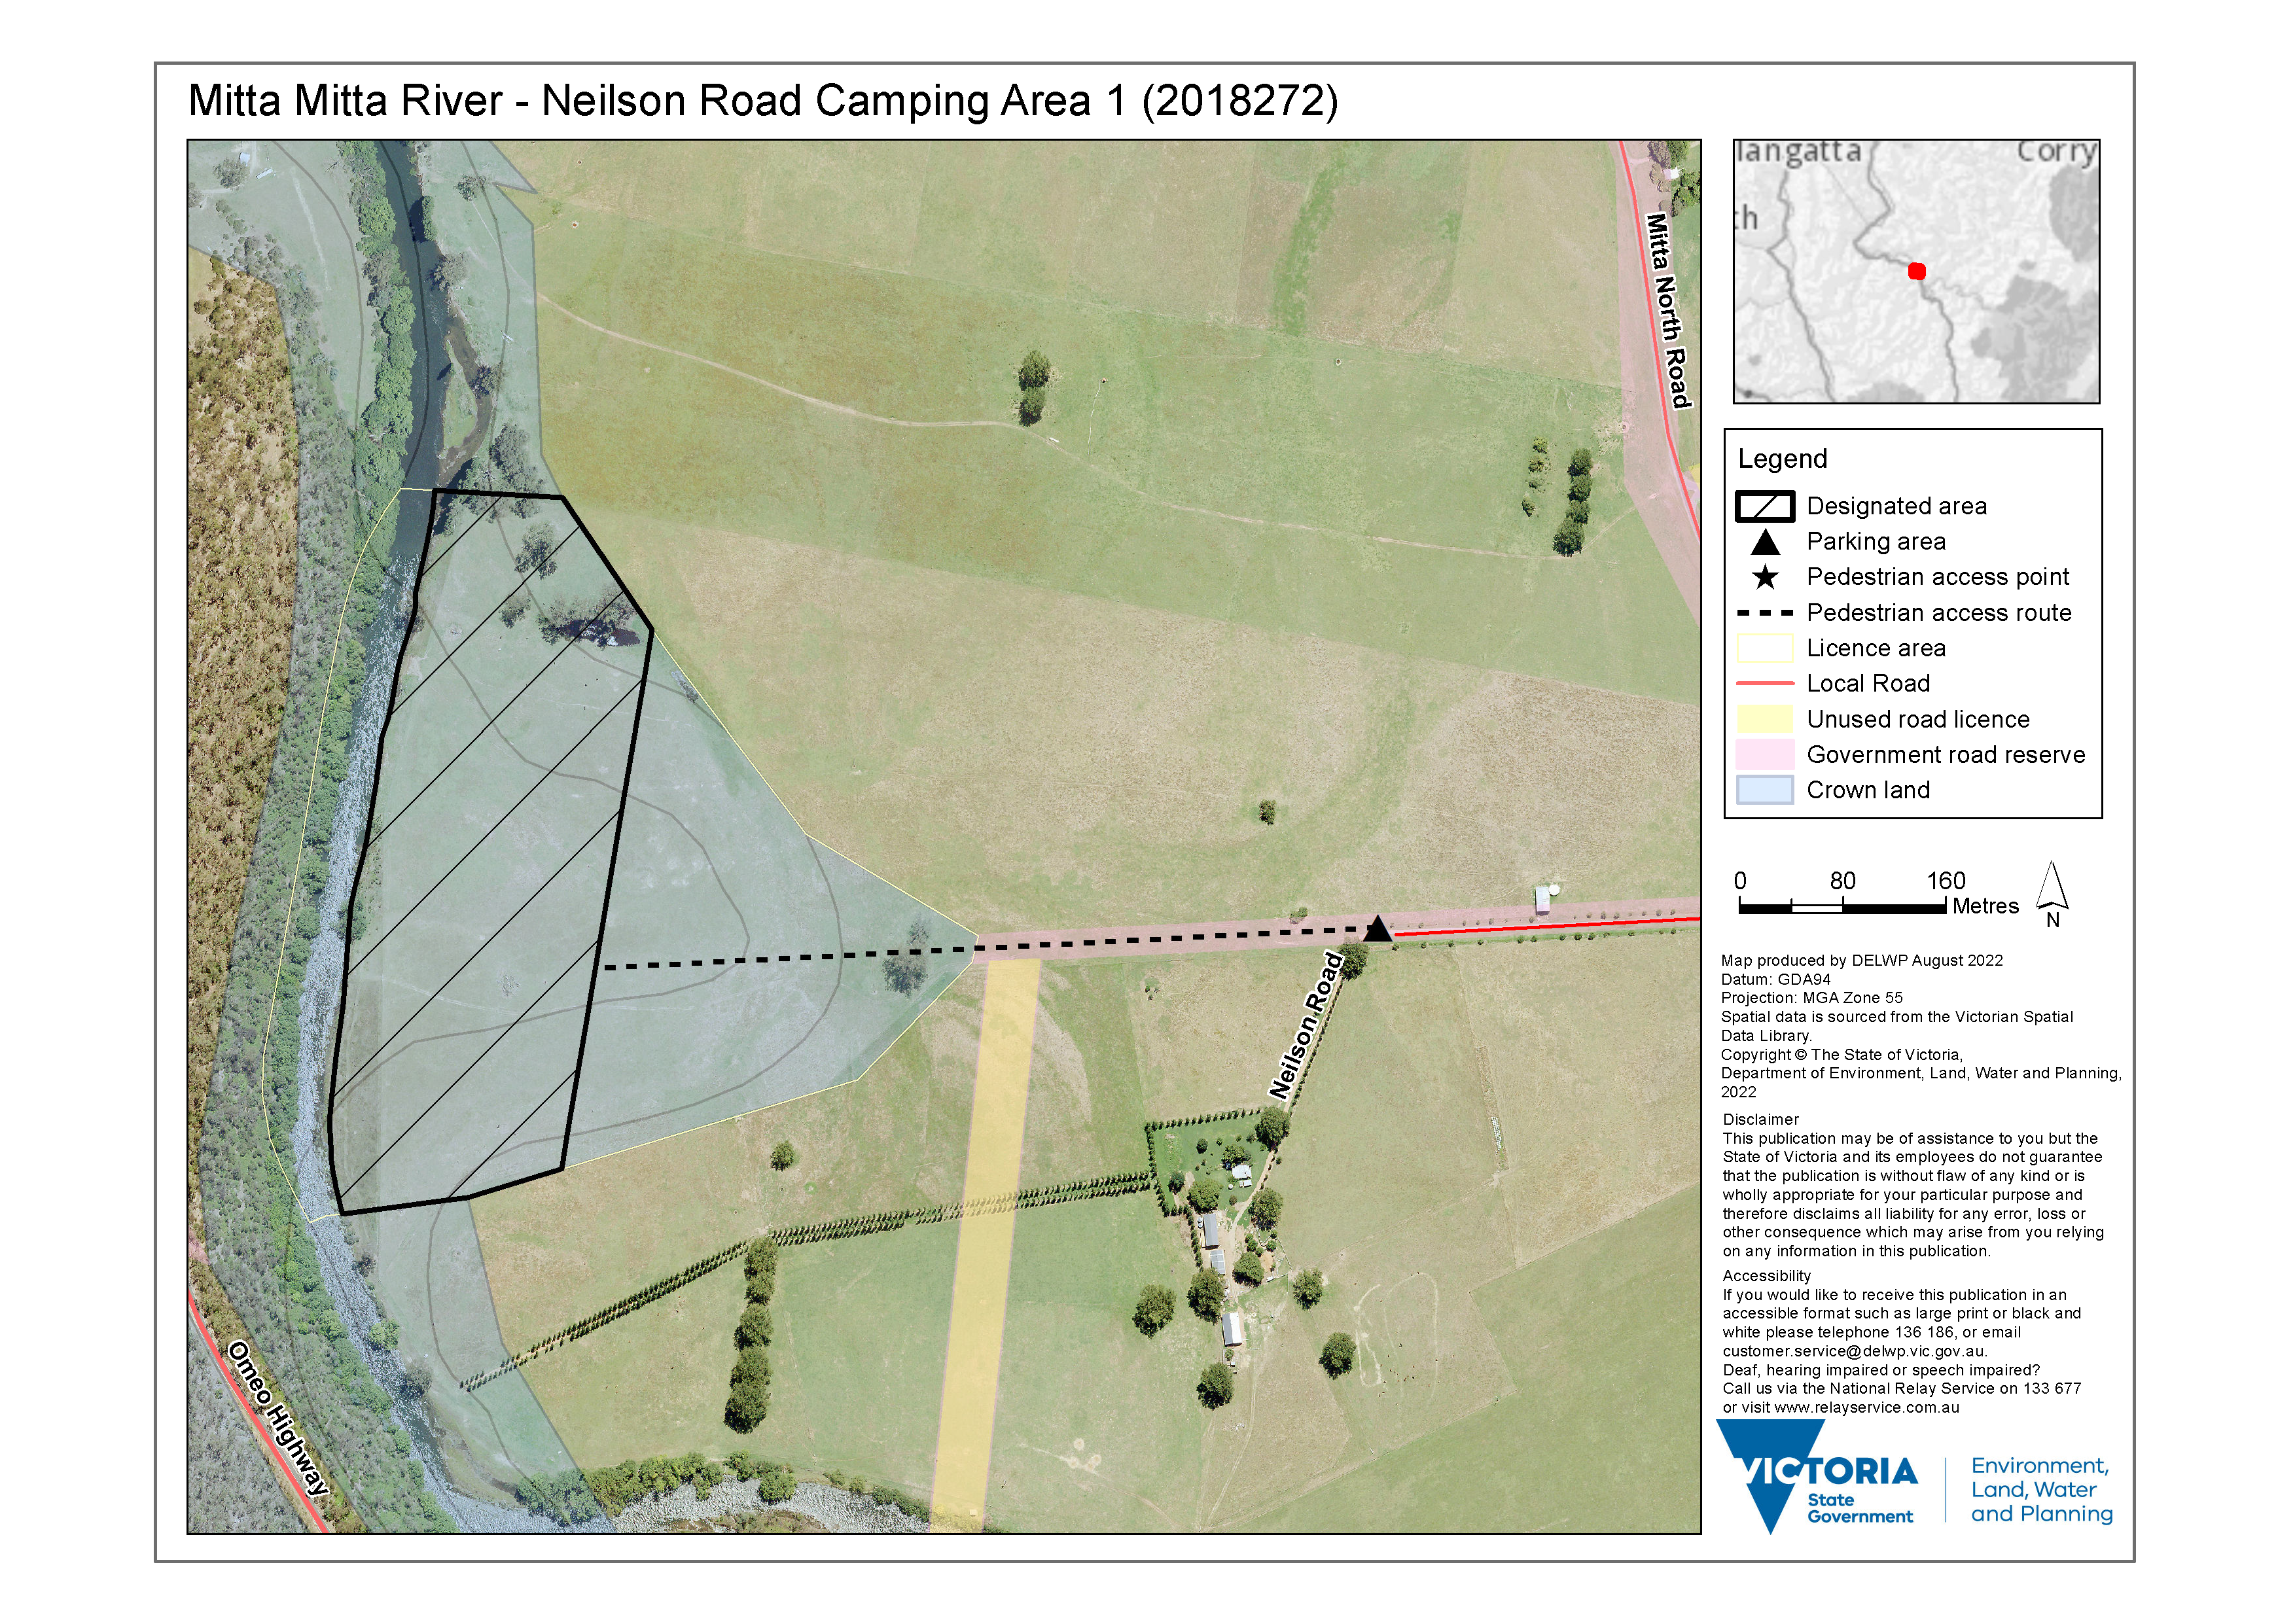 Mitta Mitta River - Neilson Road Camping Area 1- river access